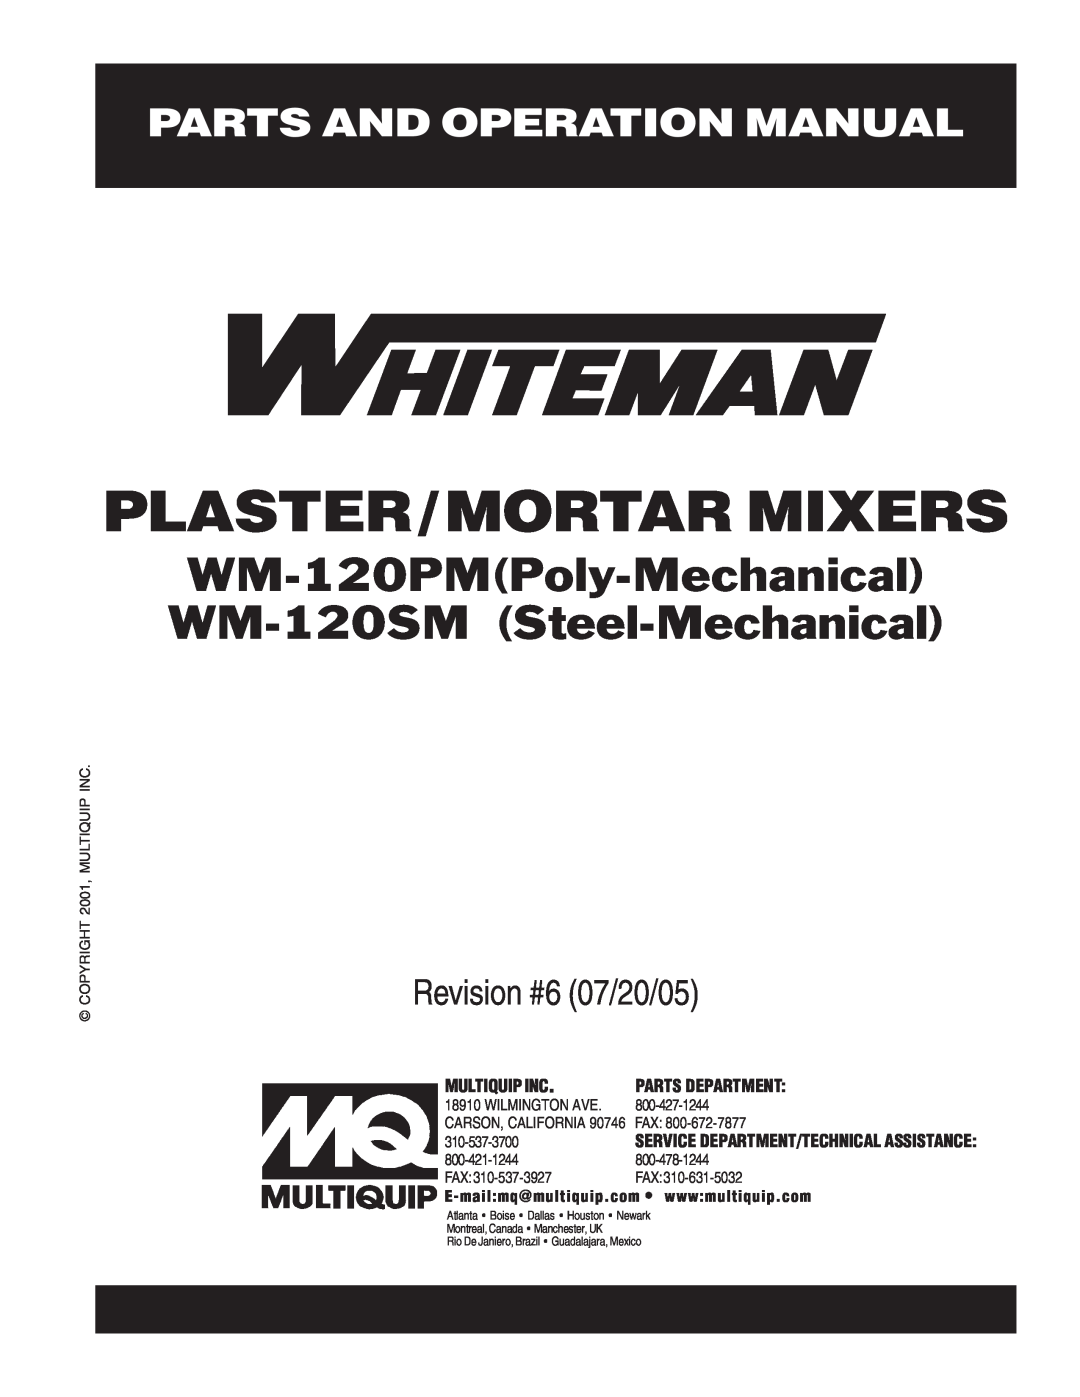 Multiquip operation manual Plaster/Mortar Mixers, WM-120PMPoly-Mechanical WM-120SM Steel-Mechanical, FAX310-537-3927 